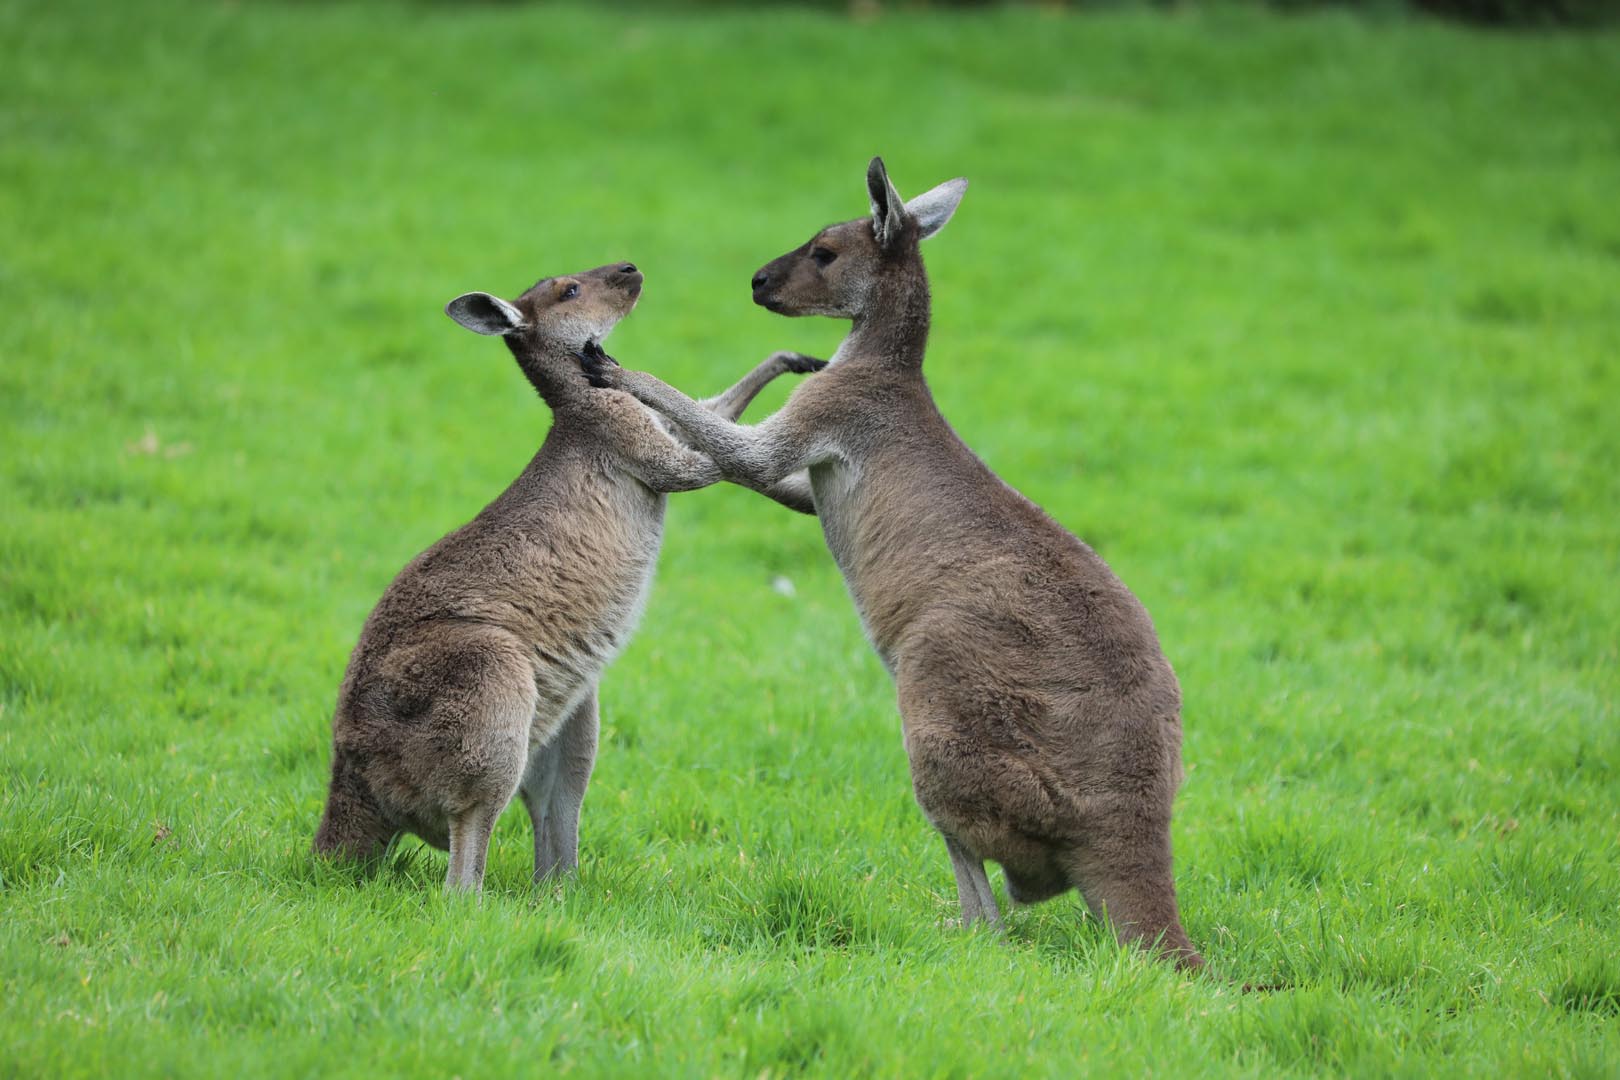 Two kangaroos play fighting on the grass IMAGE: Sarah Sia (2021)